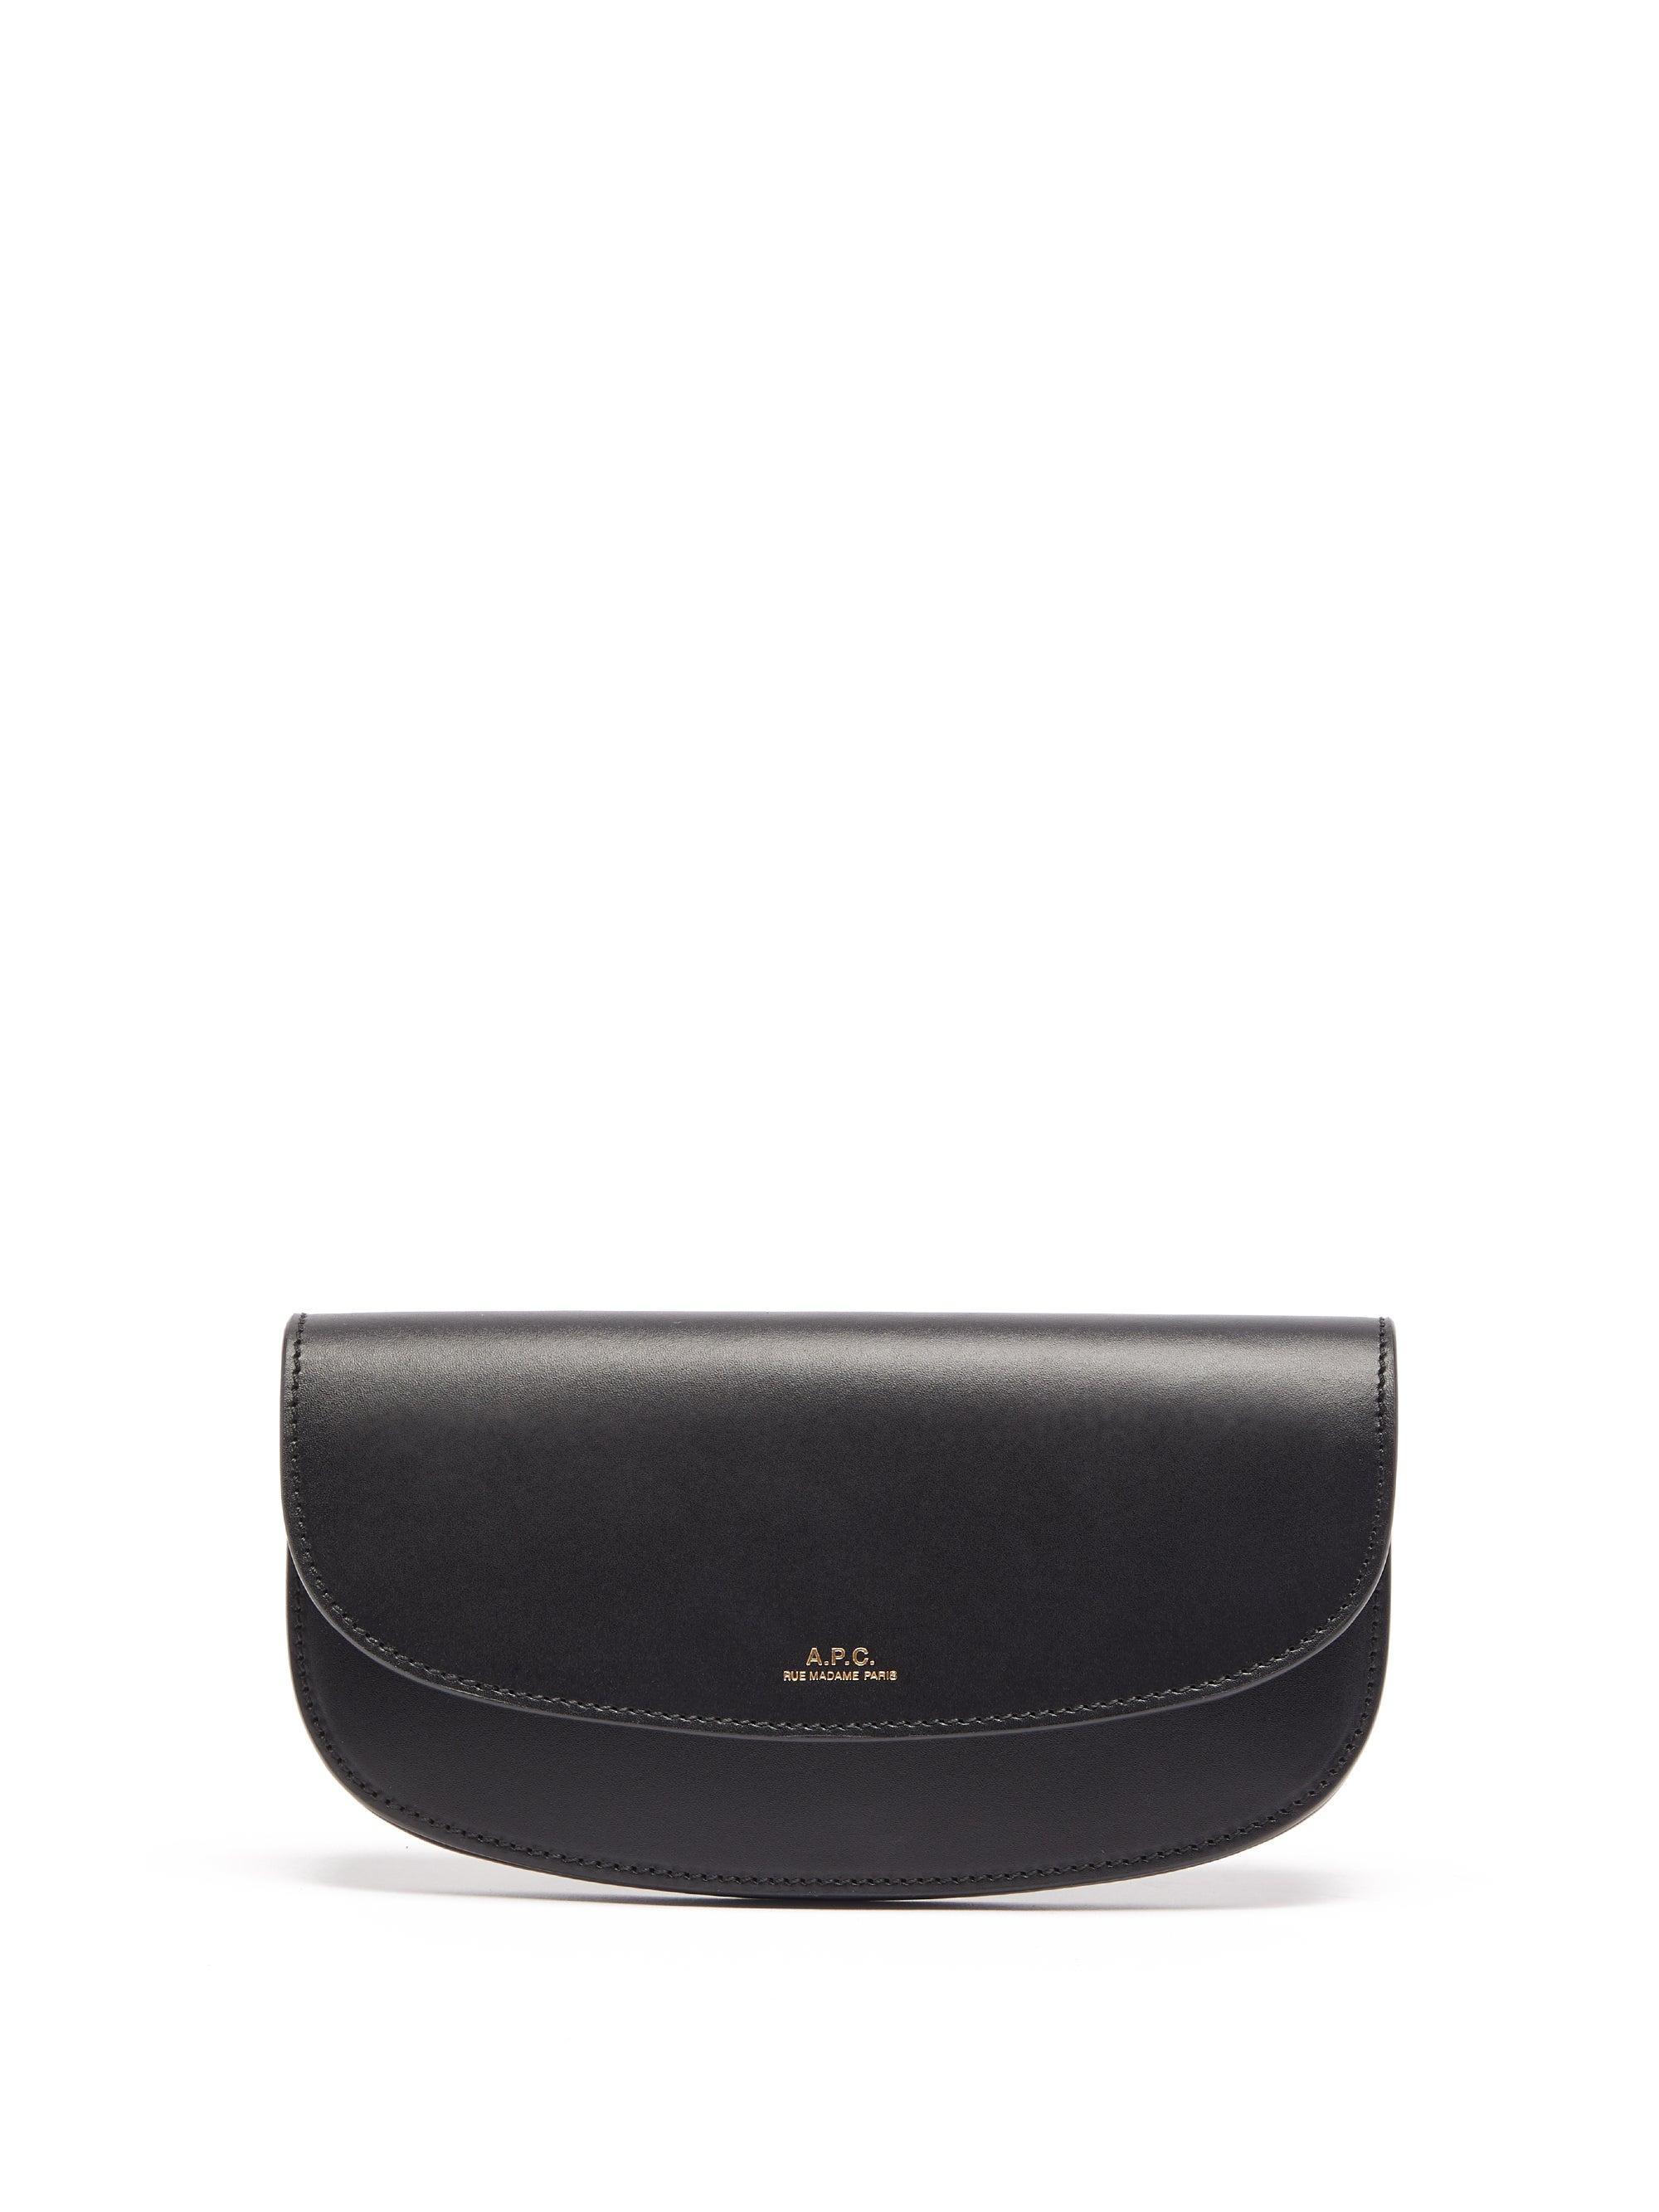 A.P.C. Genève Leather Wallet in Black | Lyst